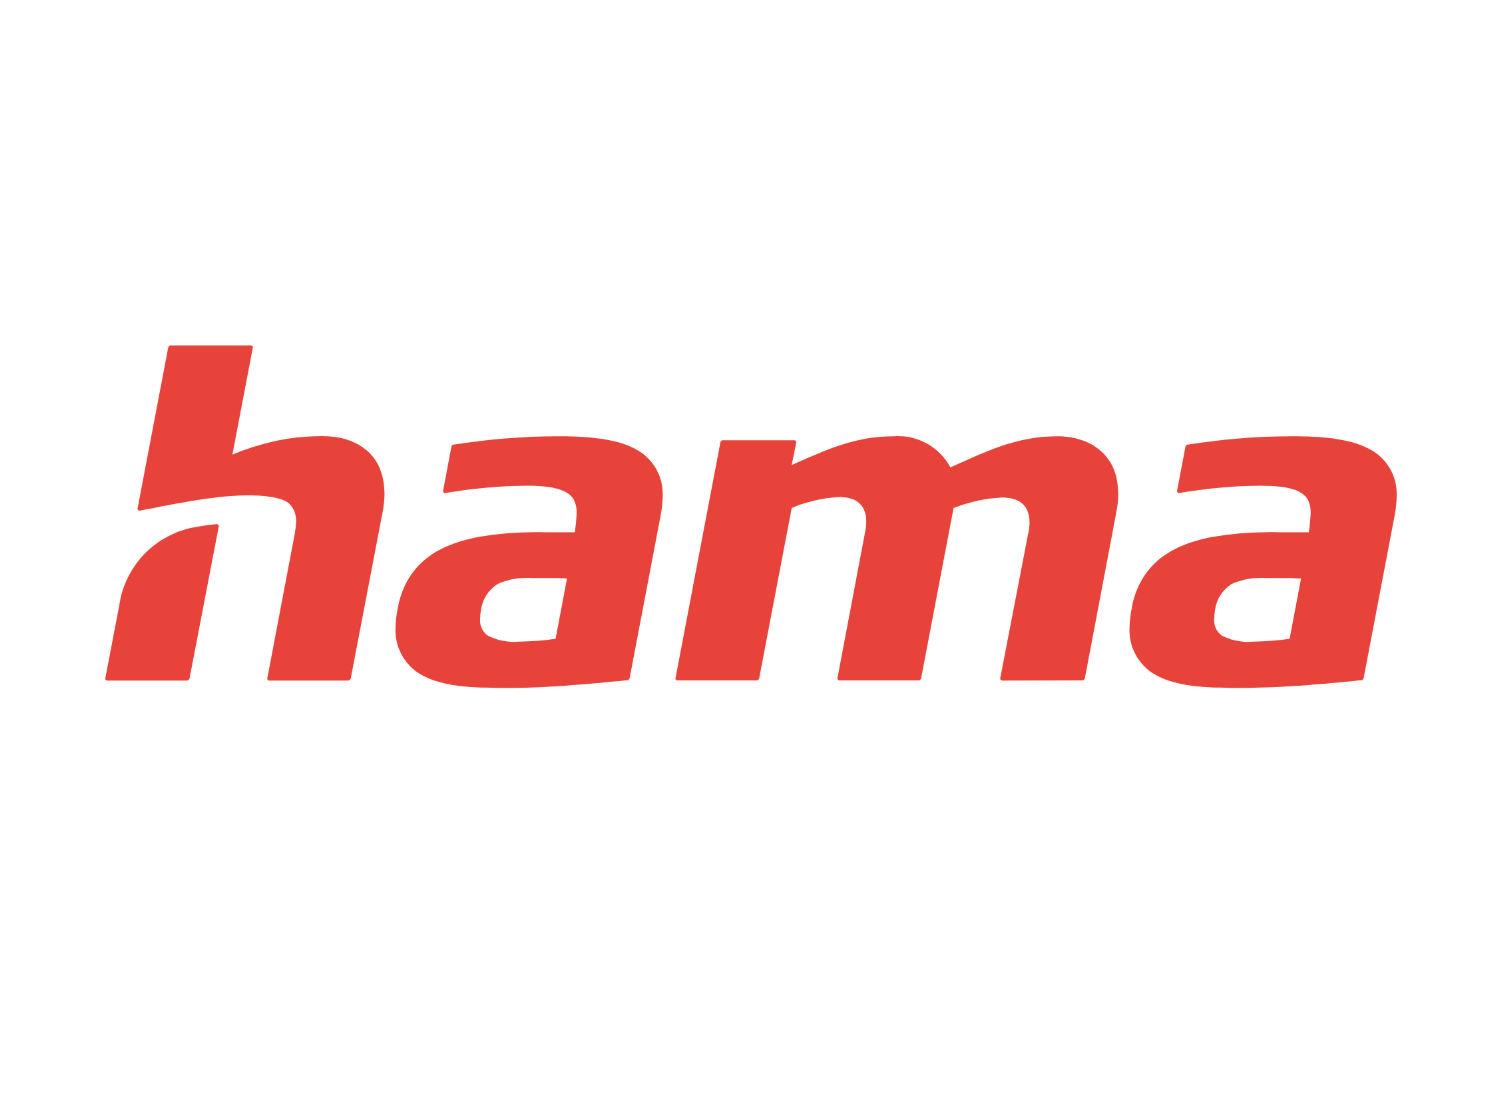 Hama Logo